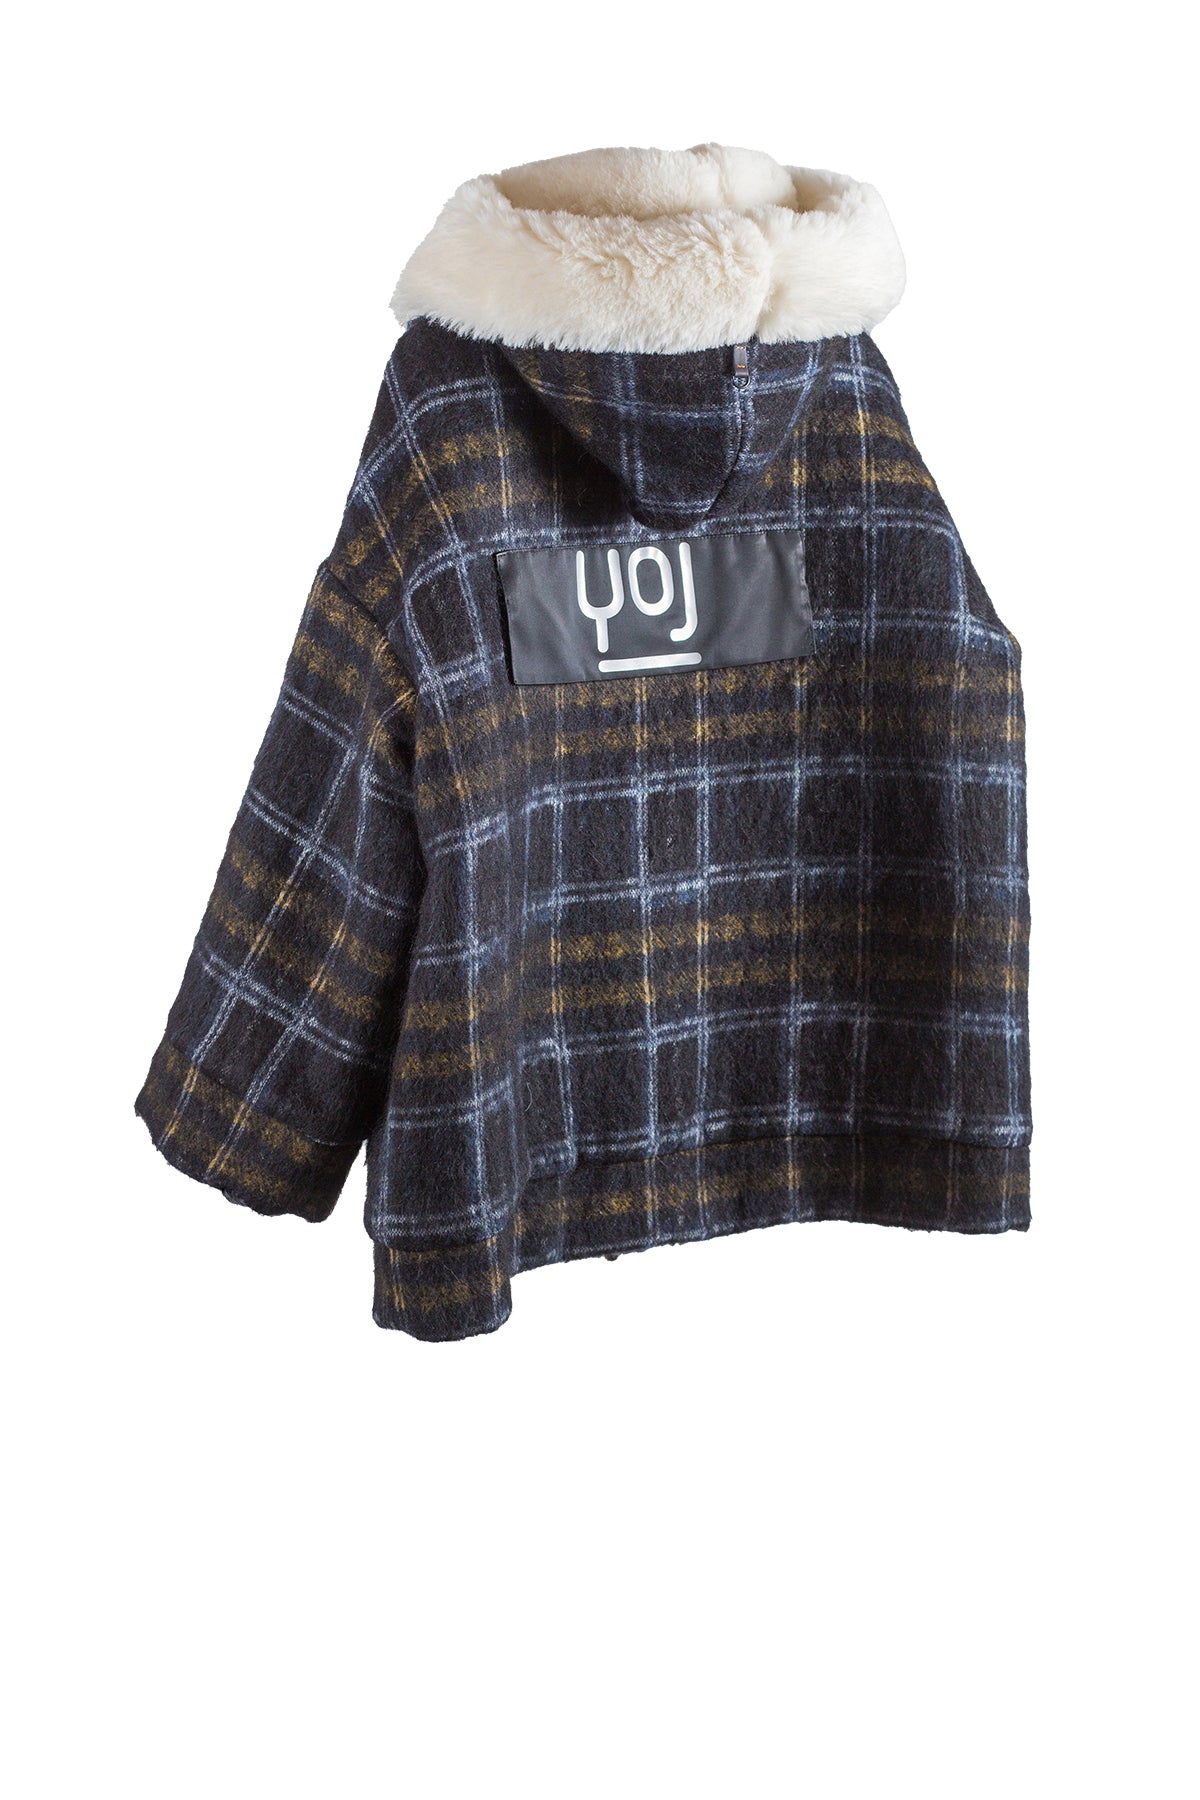 YOJ STYLE LAB Eco-sustainable Checked Sweatshirt